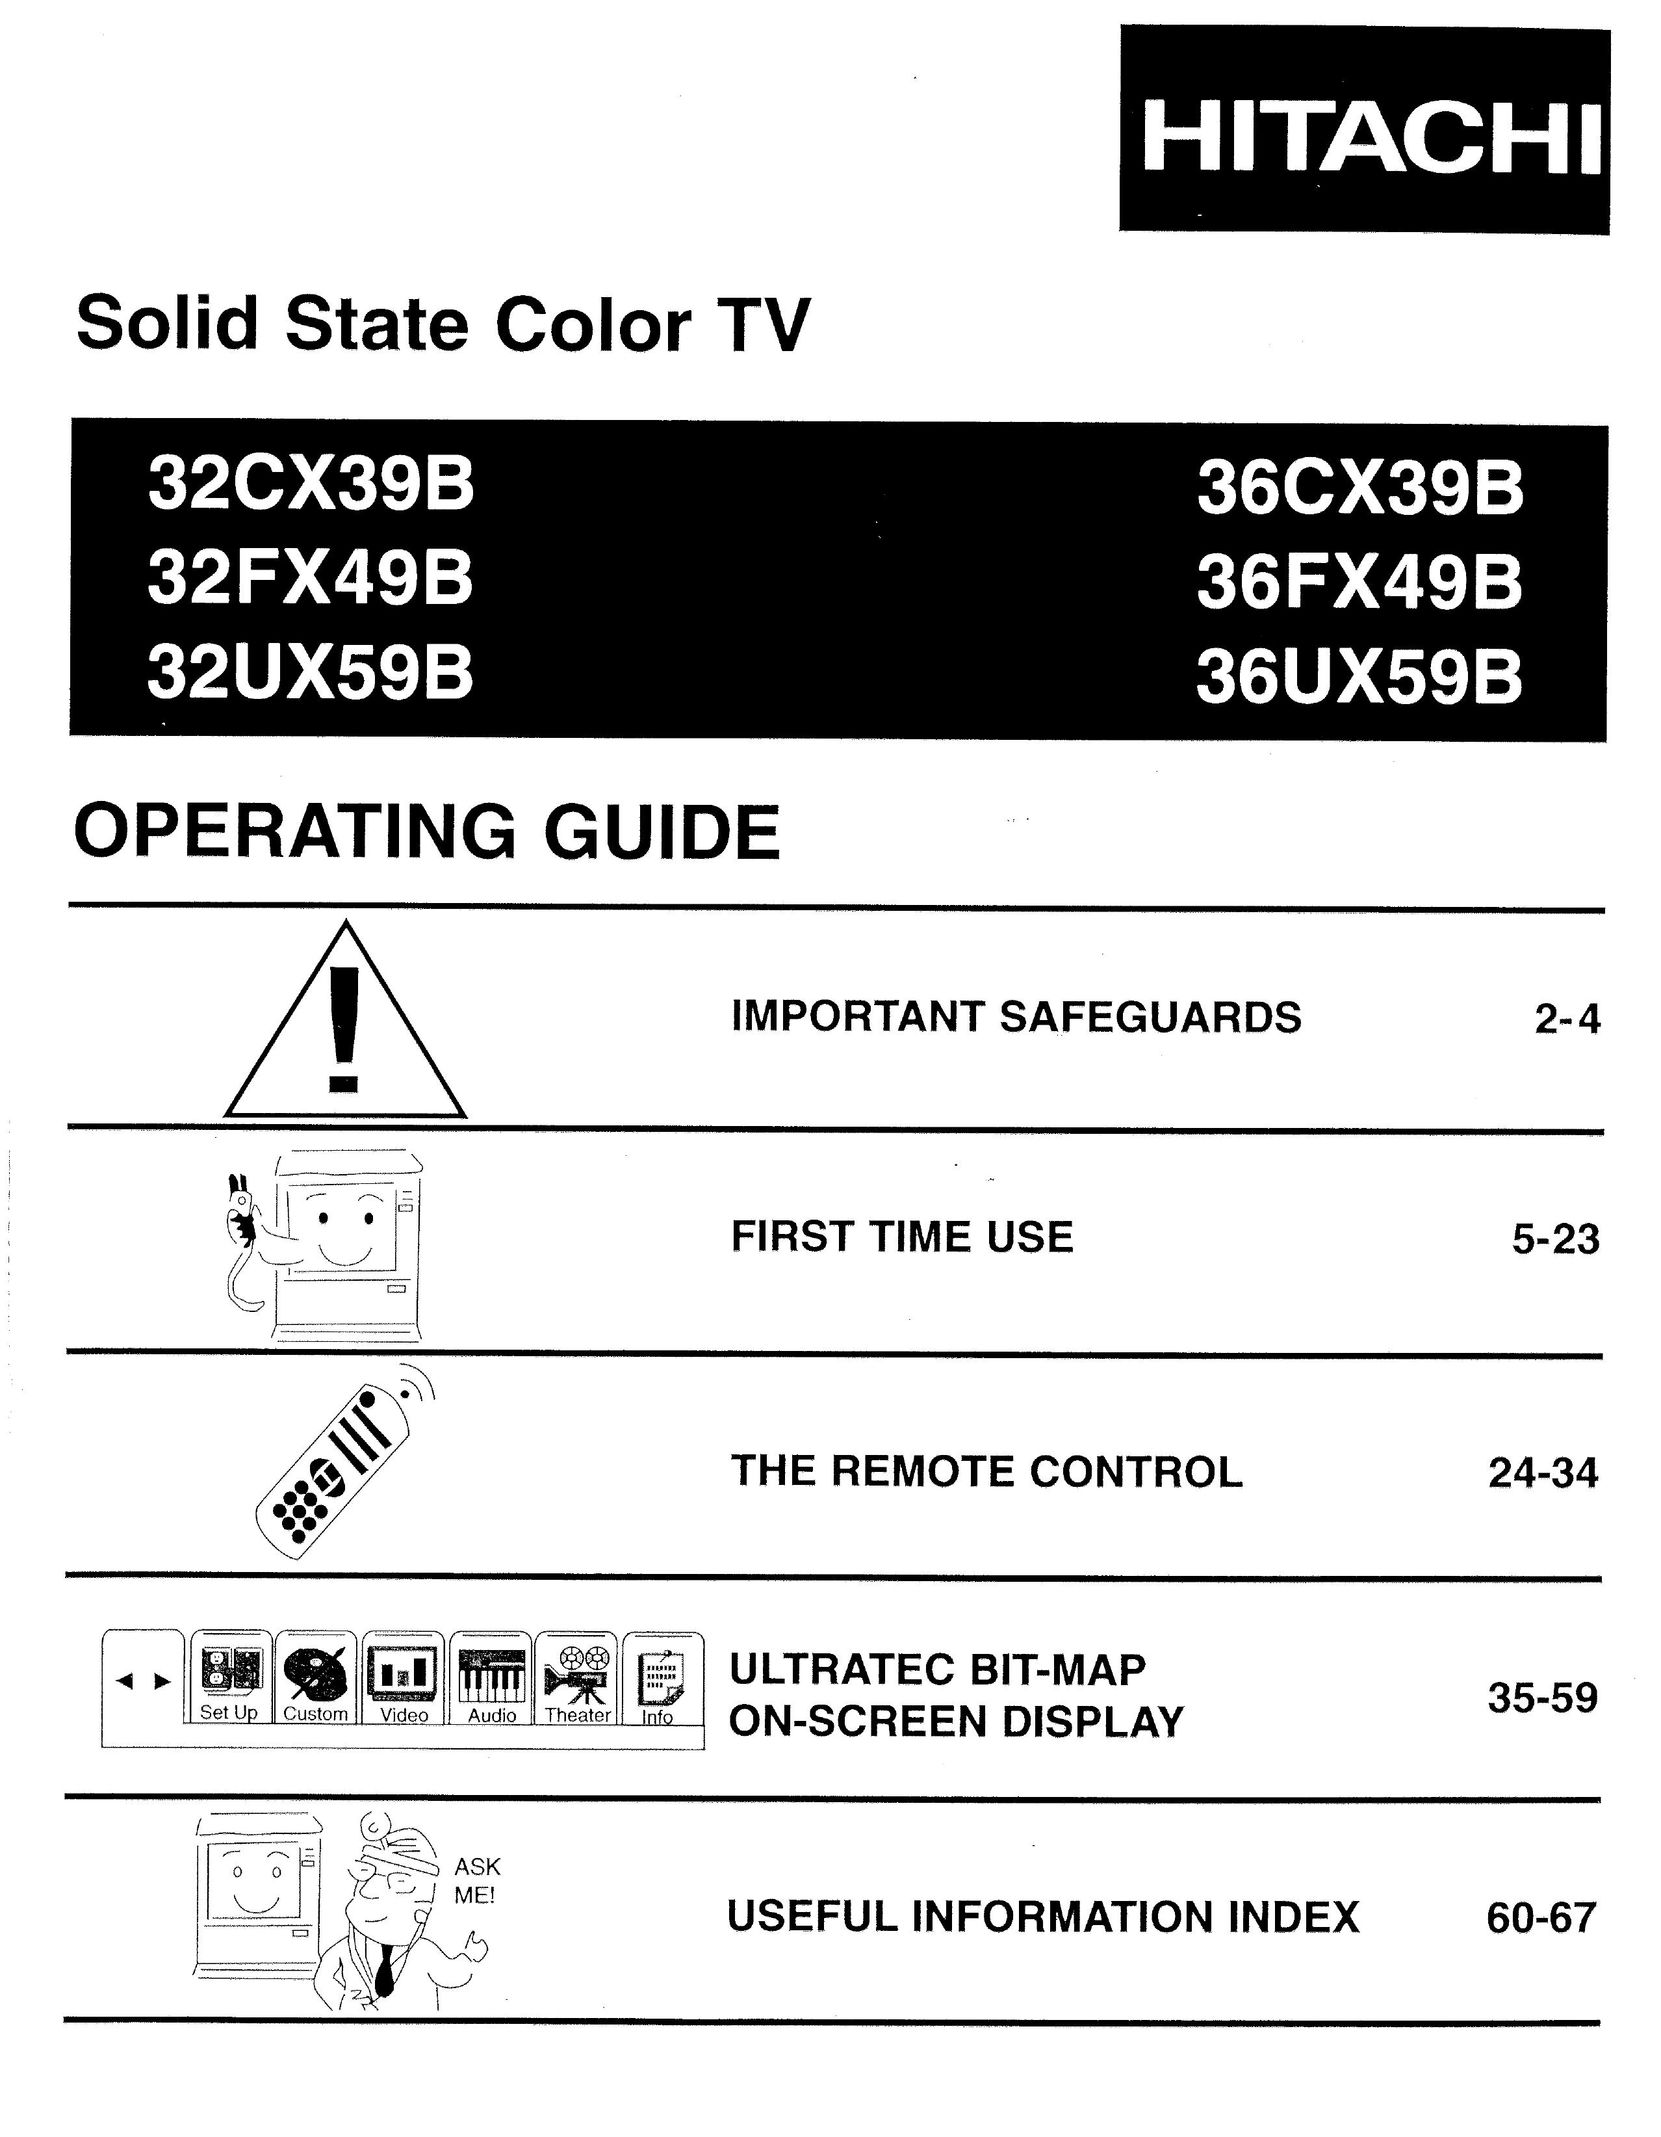 Hitachi 32UX59B CRT Television User Manual